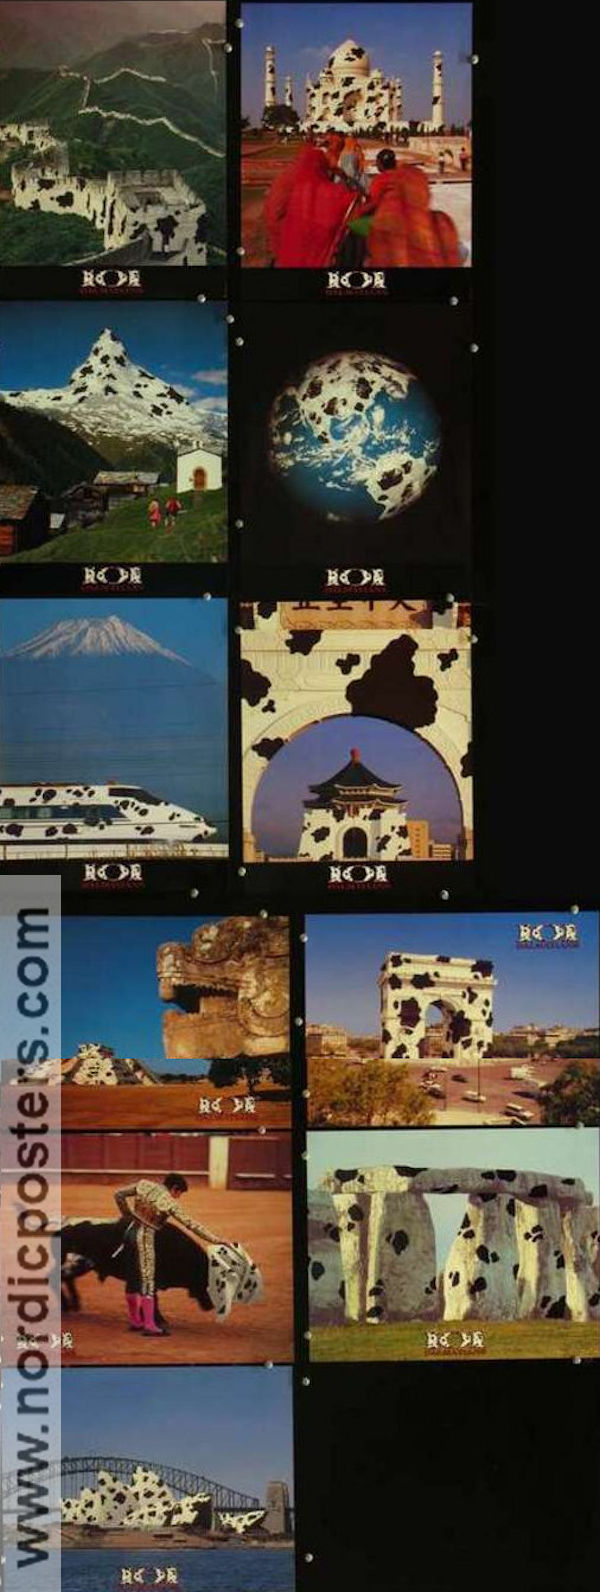 101 Dalmatians 1996 lobby card set Glenn Close